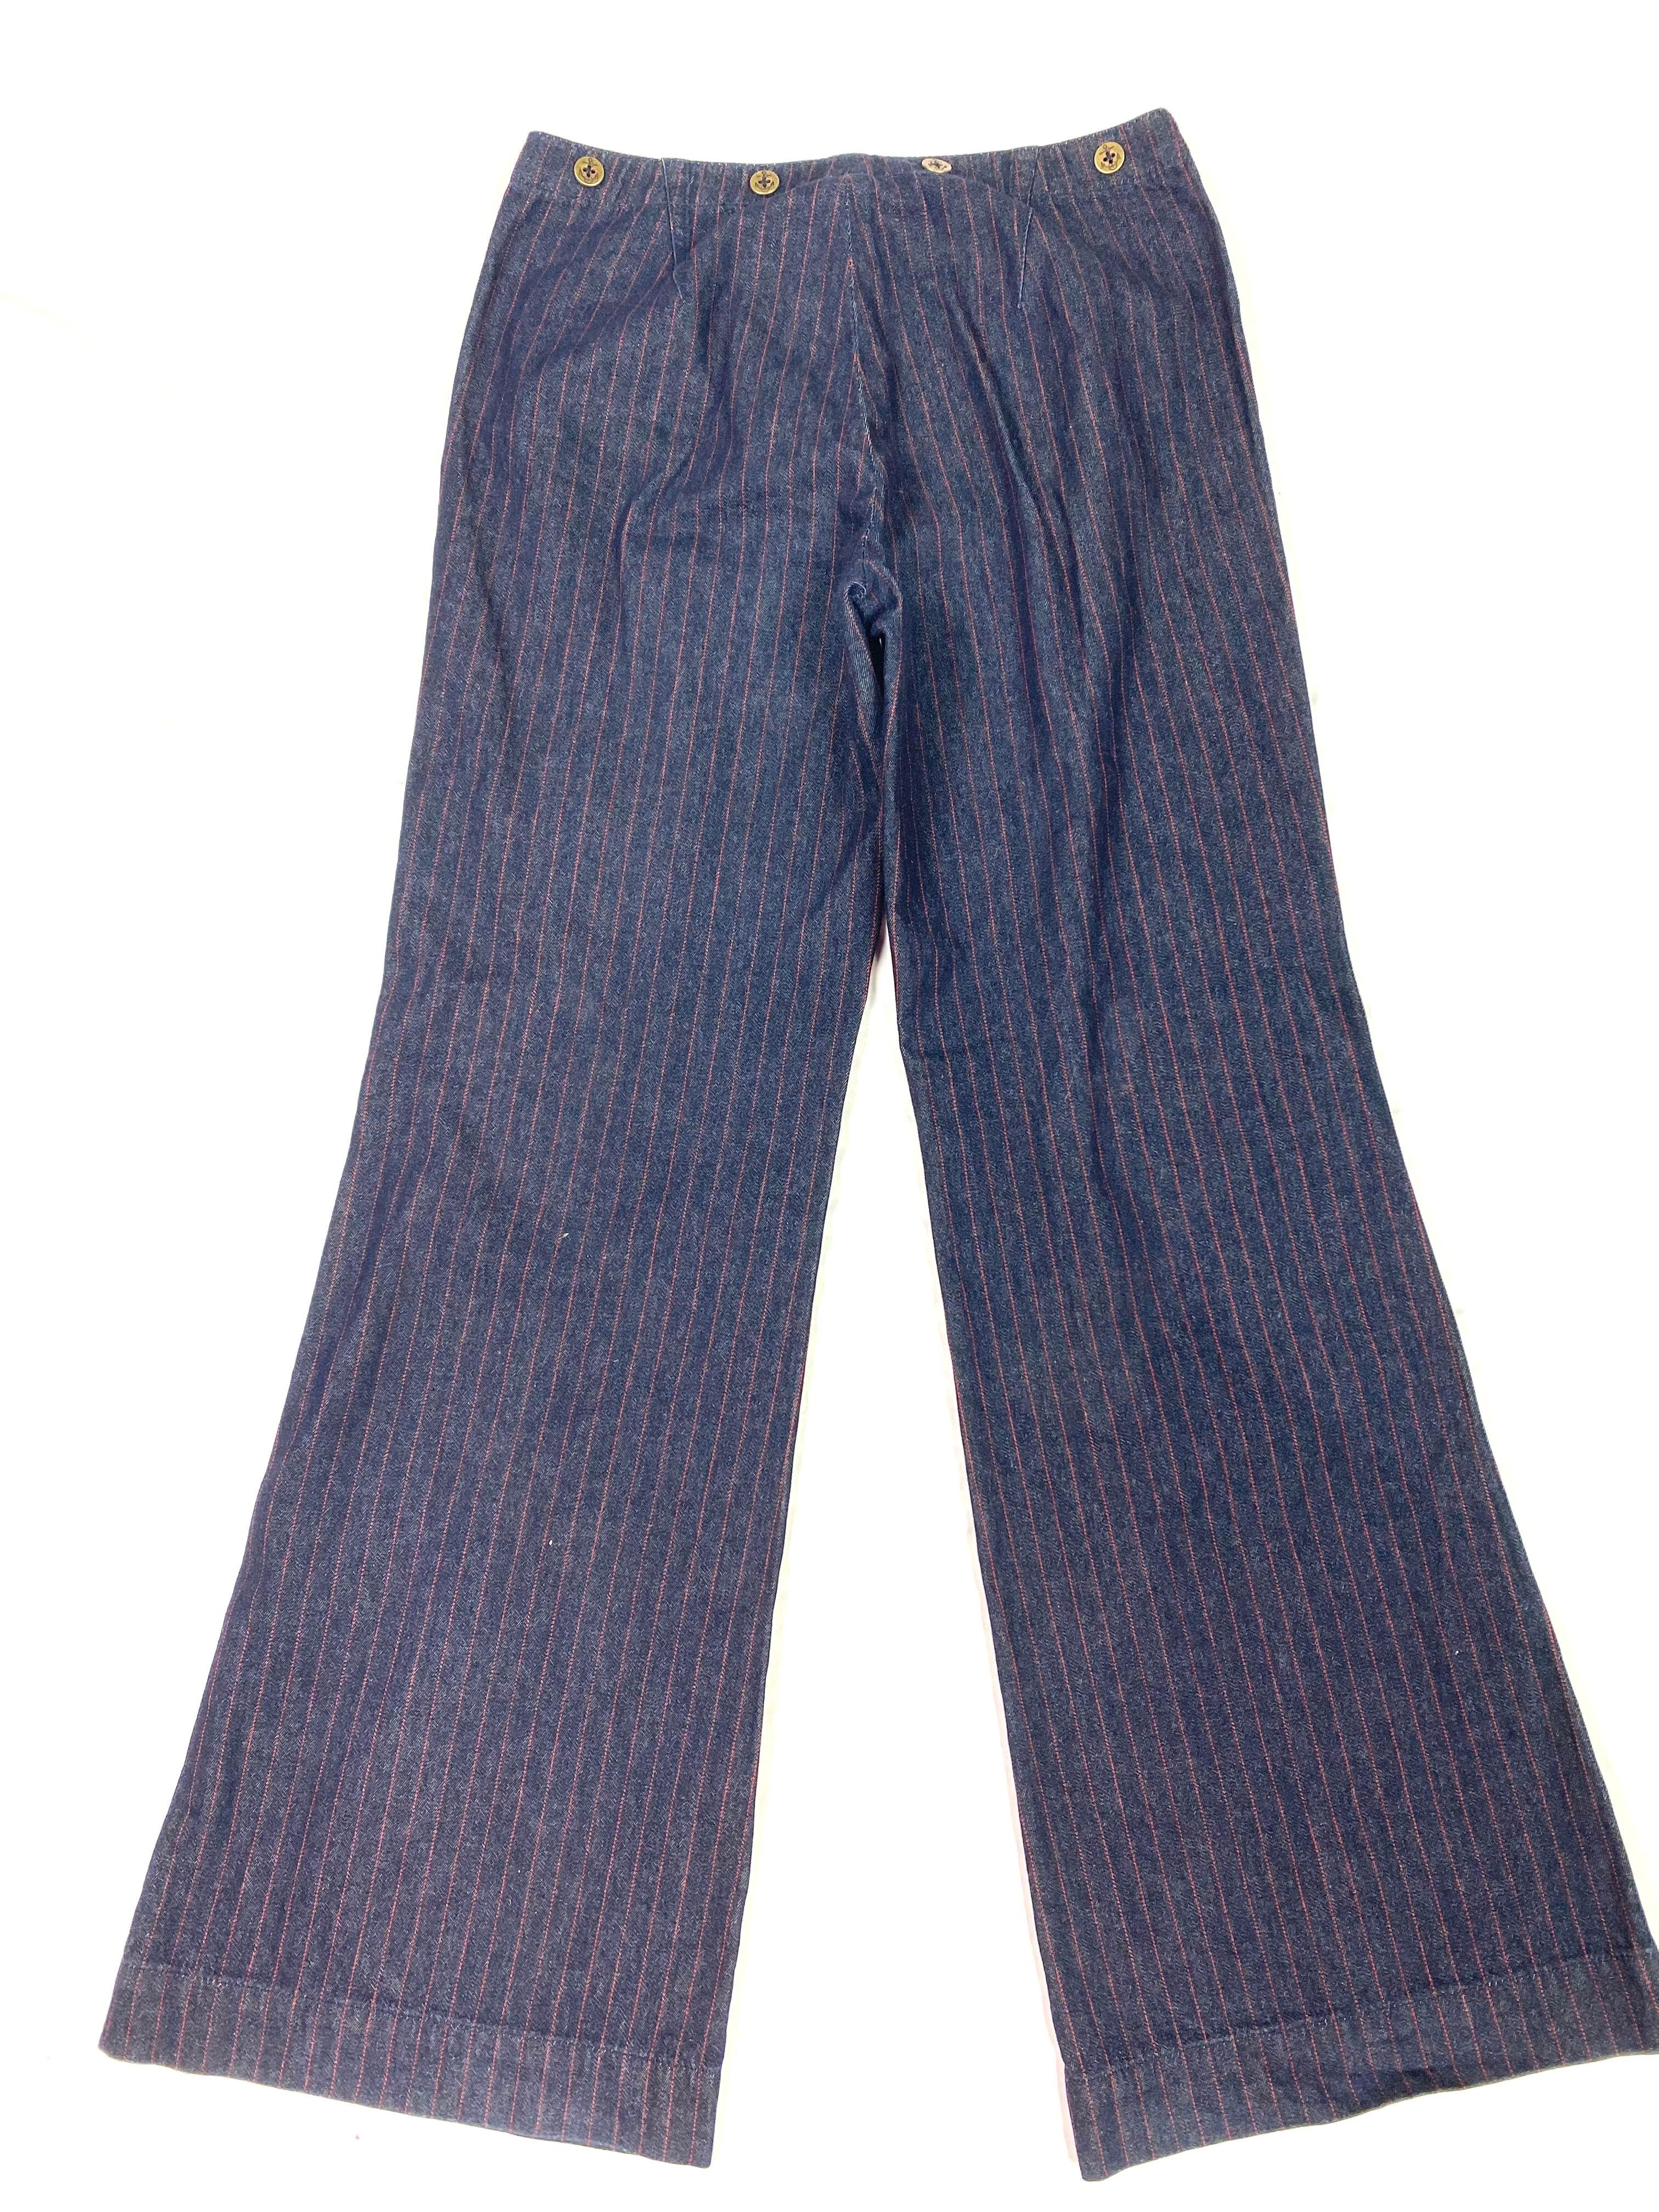 ralph lauren jeans company